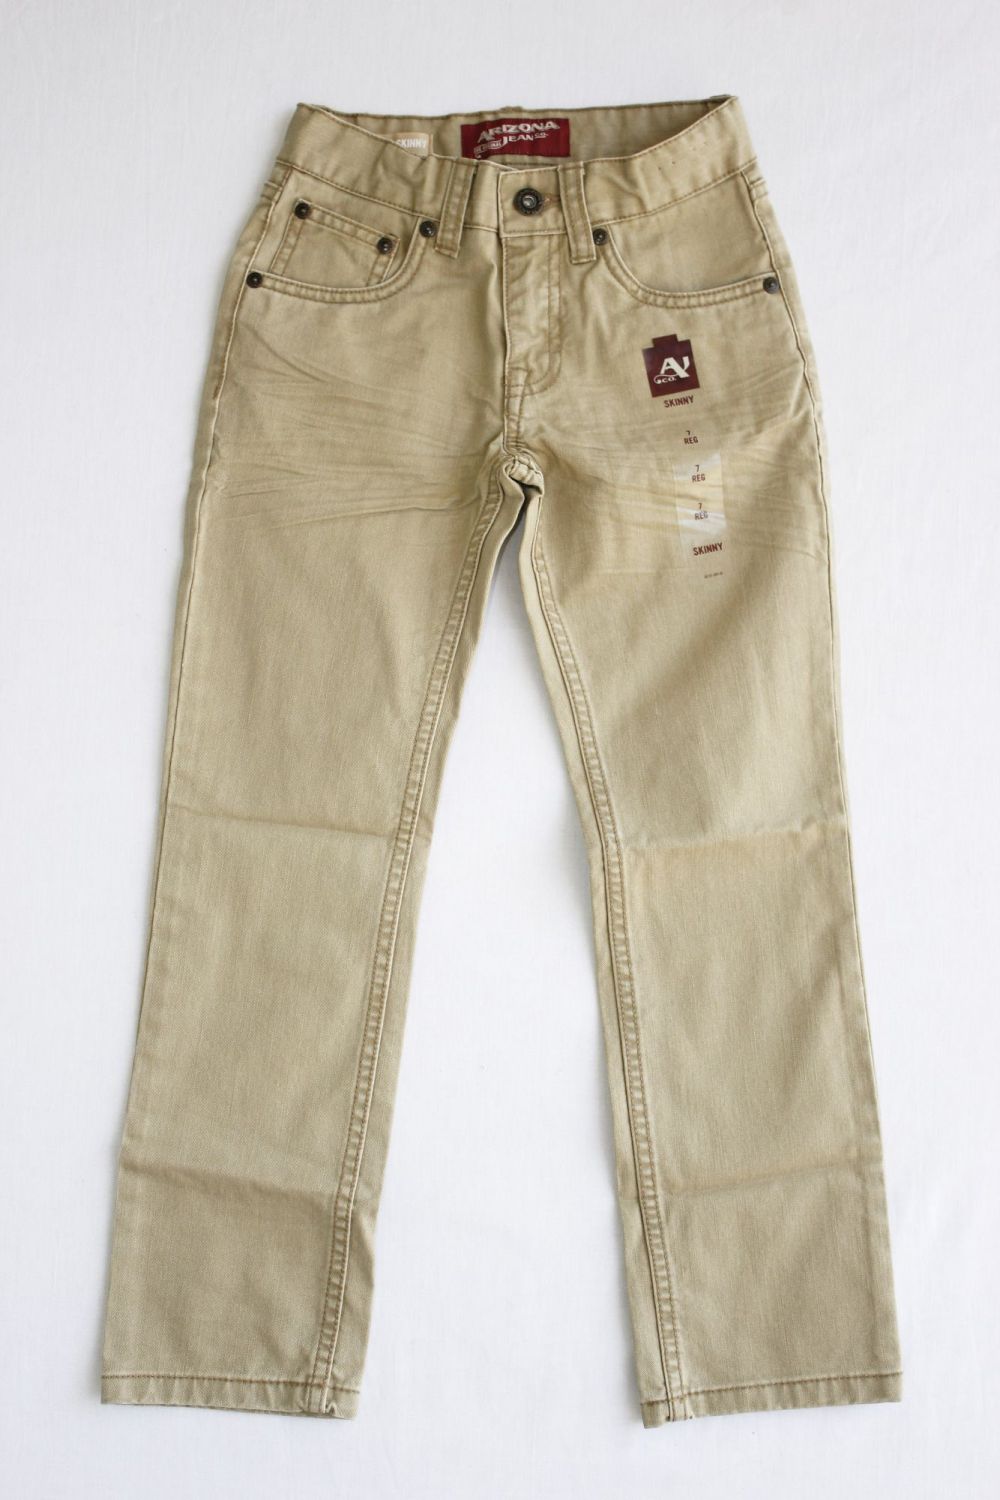 Khaki Coloured SKinny Jeans - Size 7